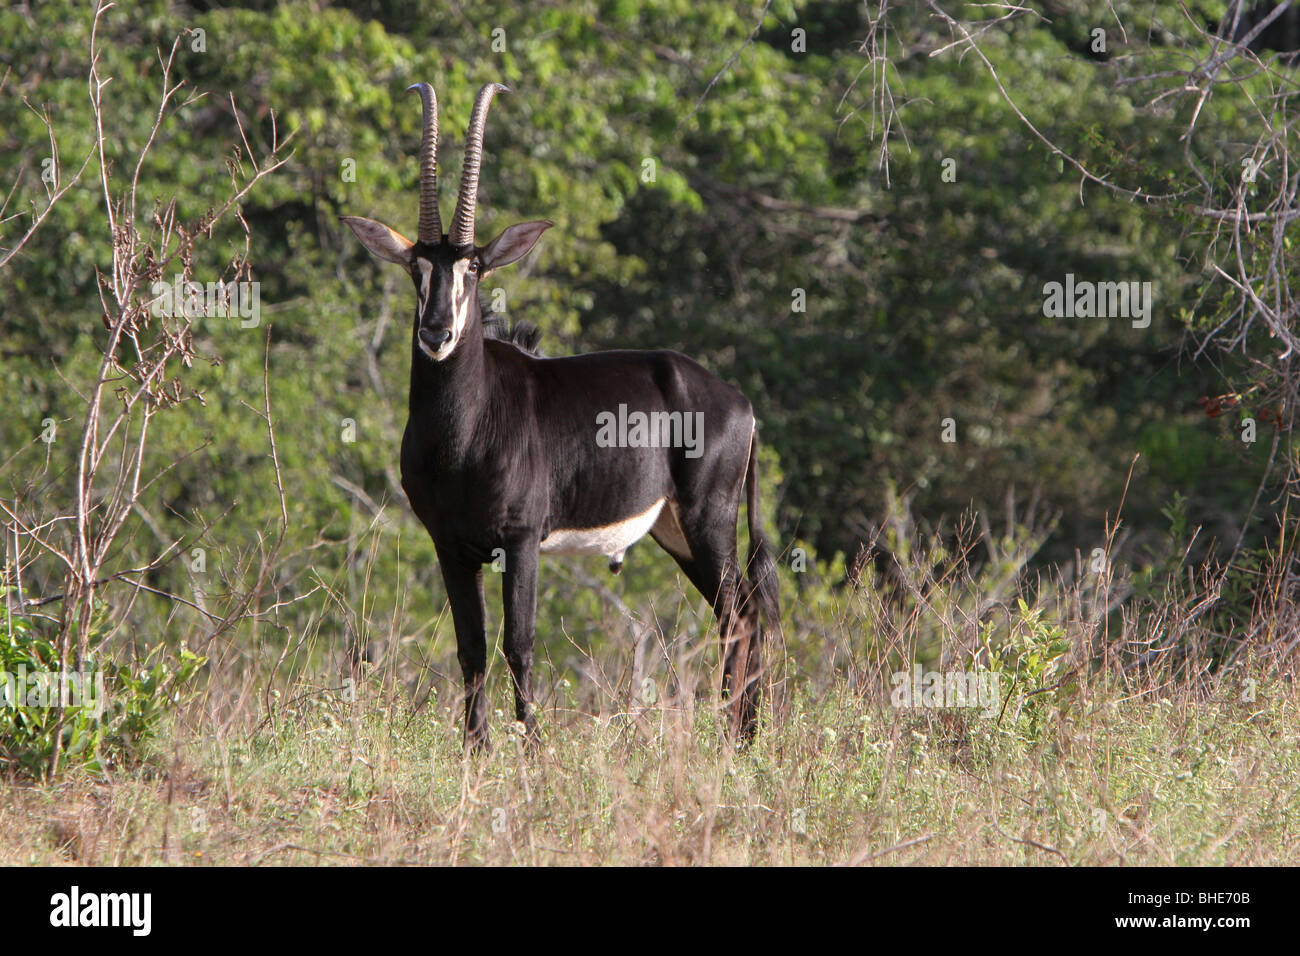 Hippotrague (Hippotragus niger), le site Shimba Hills National Reserve, Kenya Banque D'Images